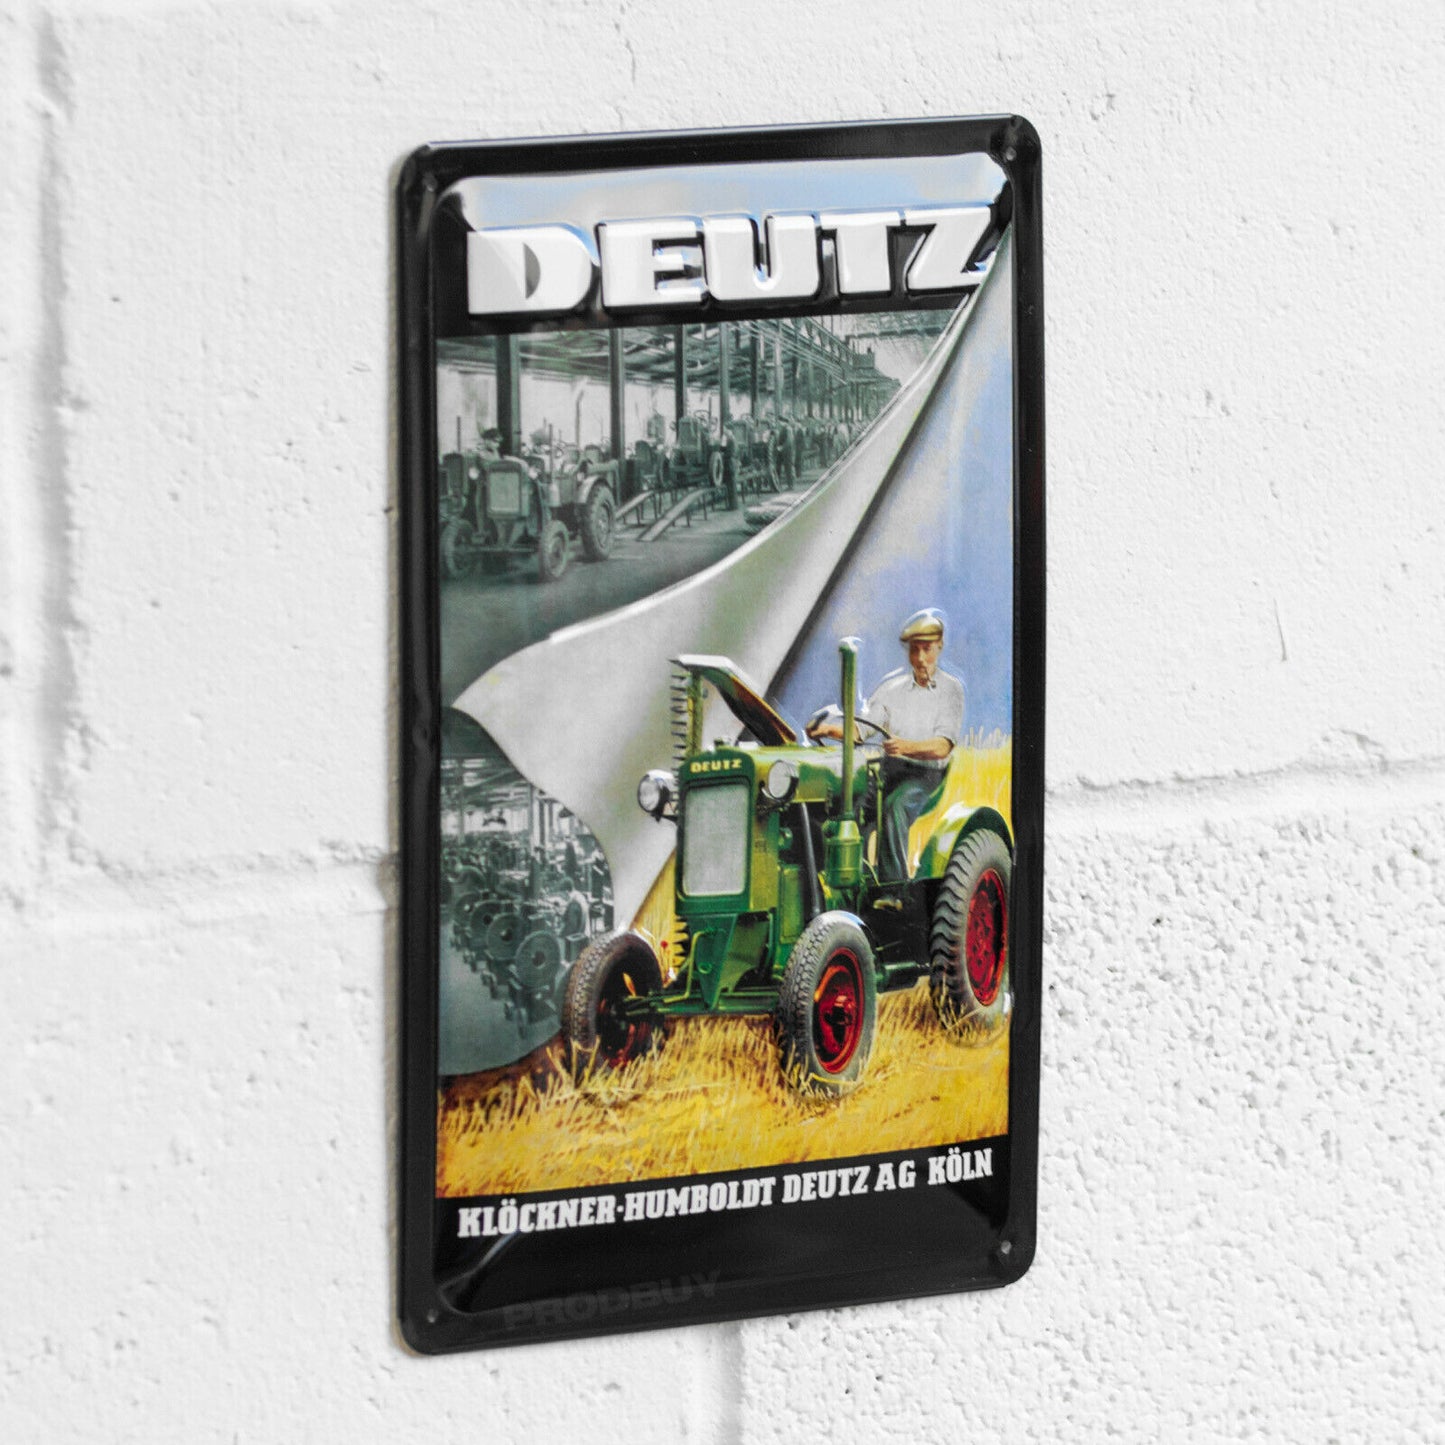 Deutz Tractor 30cm Metal Wall Sign Retro Farm Garage Plaque Art Gift